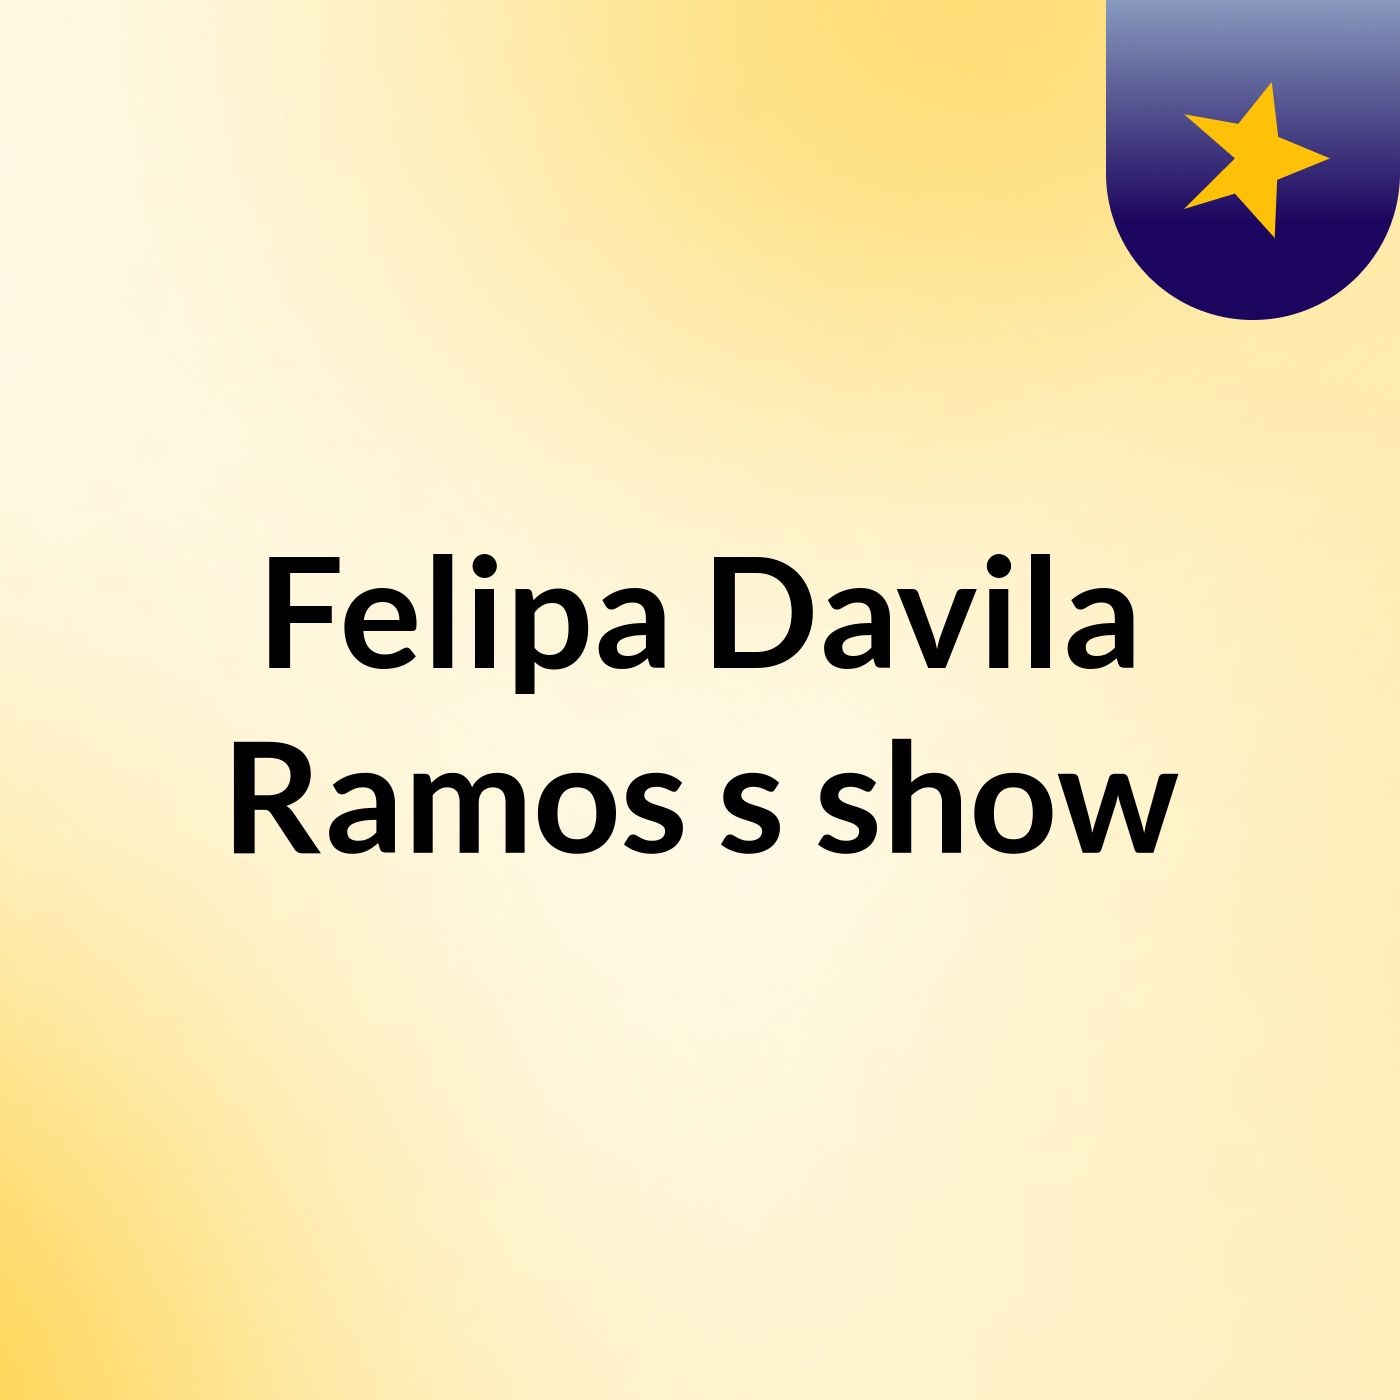 Felipa Davila Ramos's show